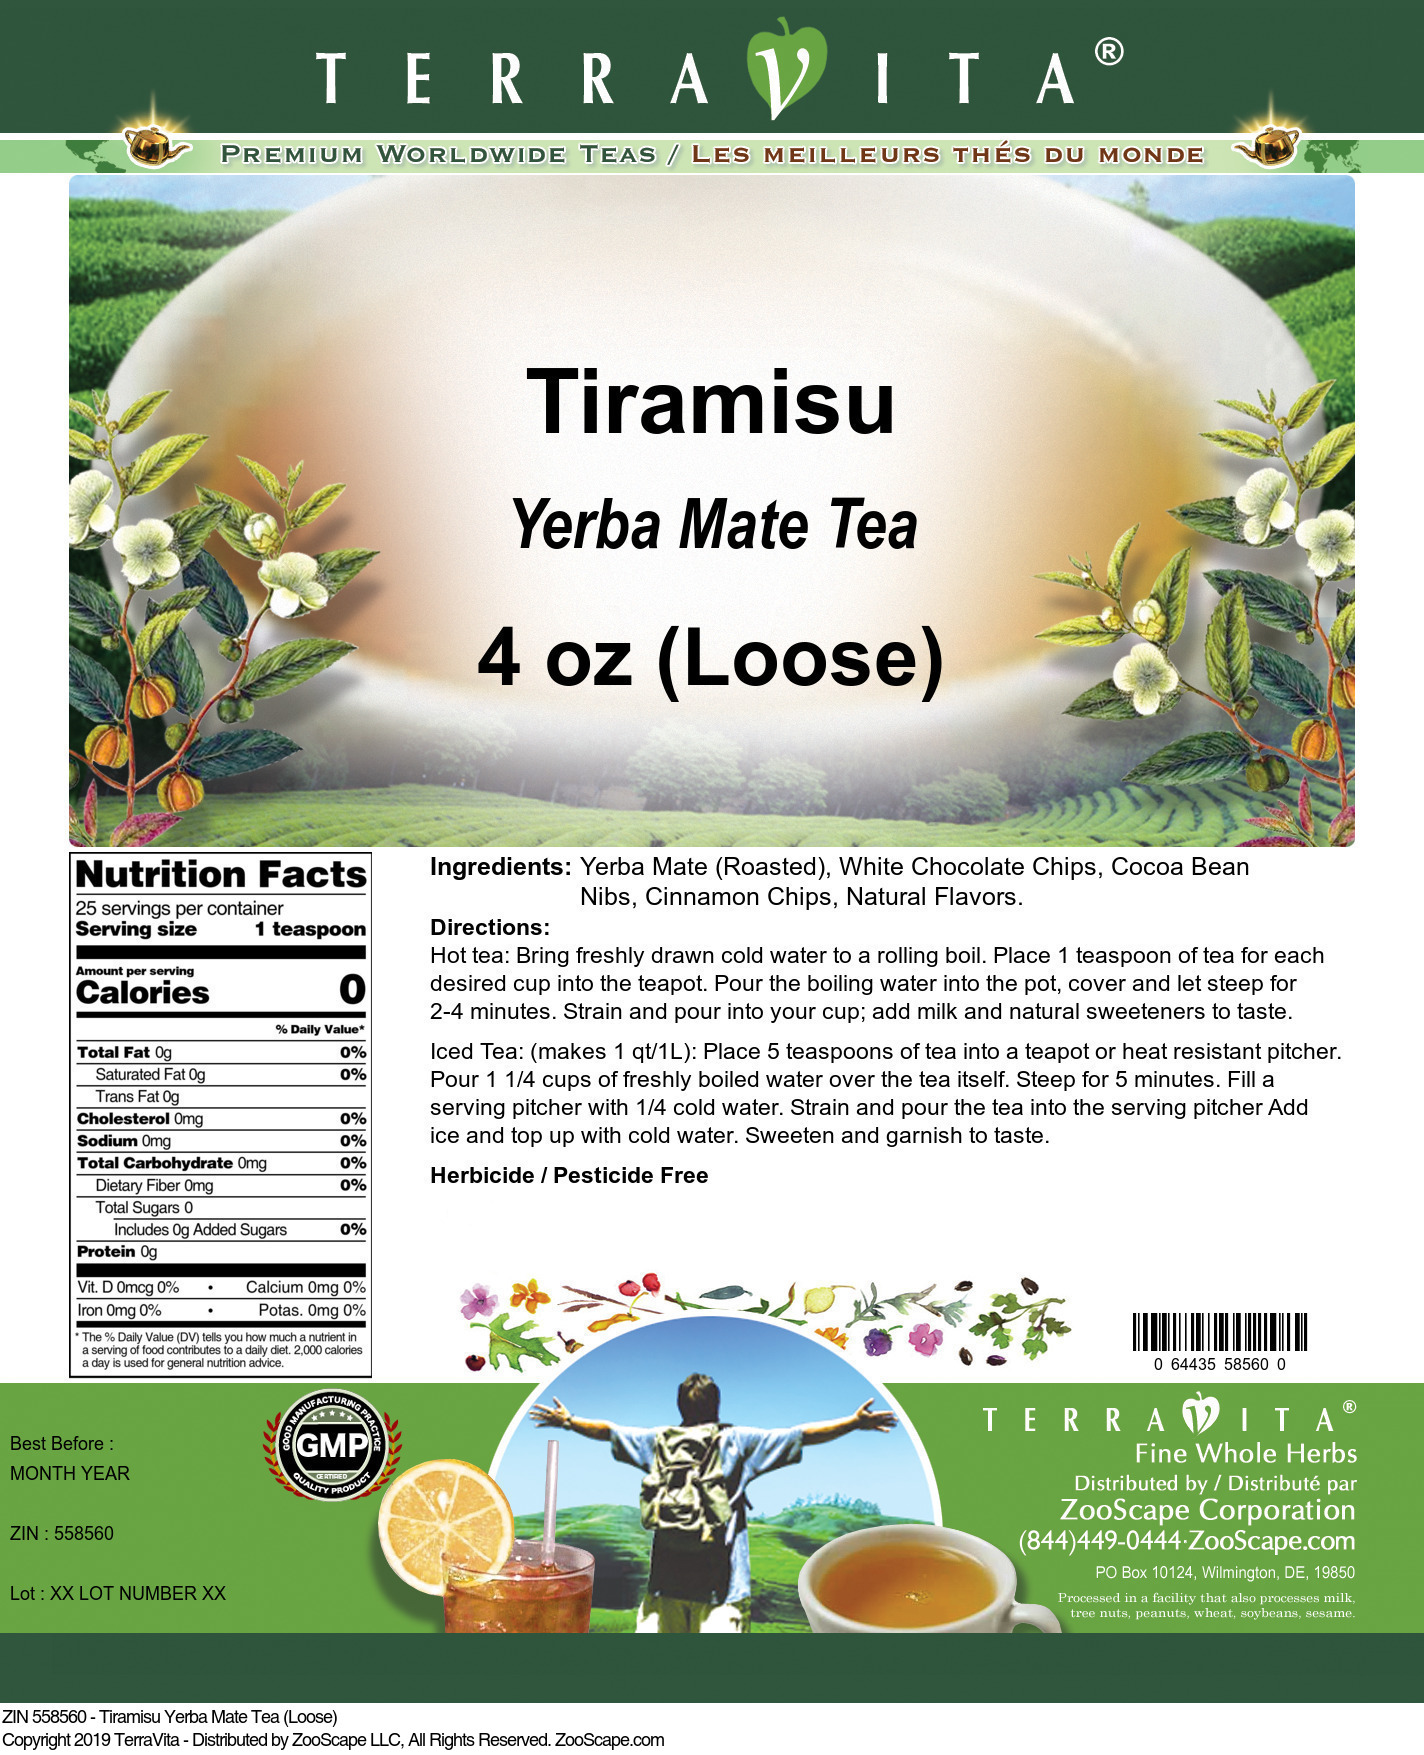 Tiramisu Yerba Mate Tea (Loose) - Label